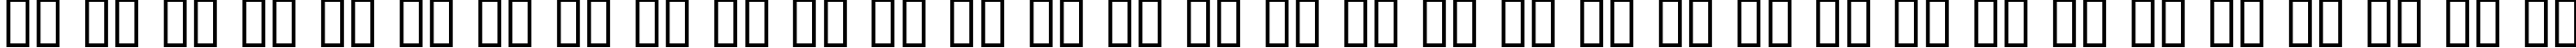 Пример написания русского алфавита шрифтом Aquaduct    Plain